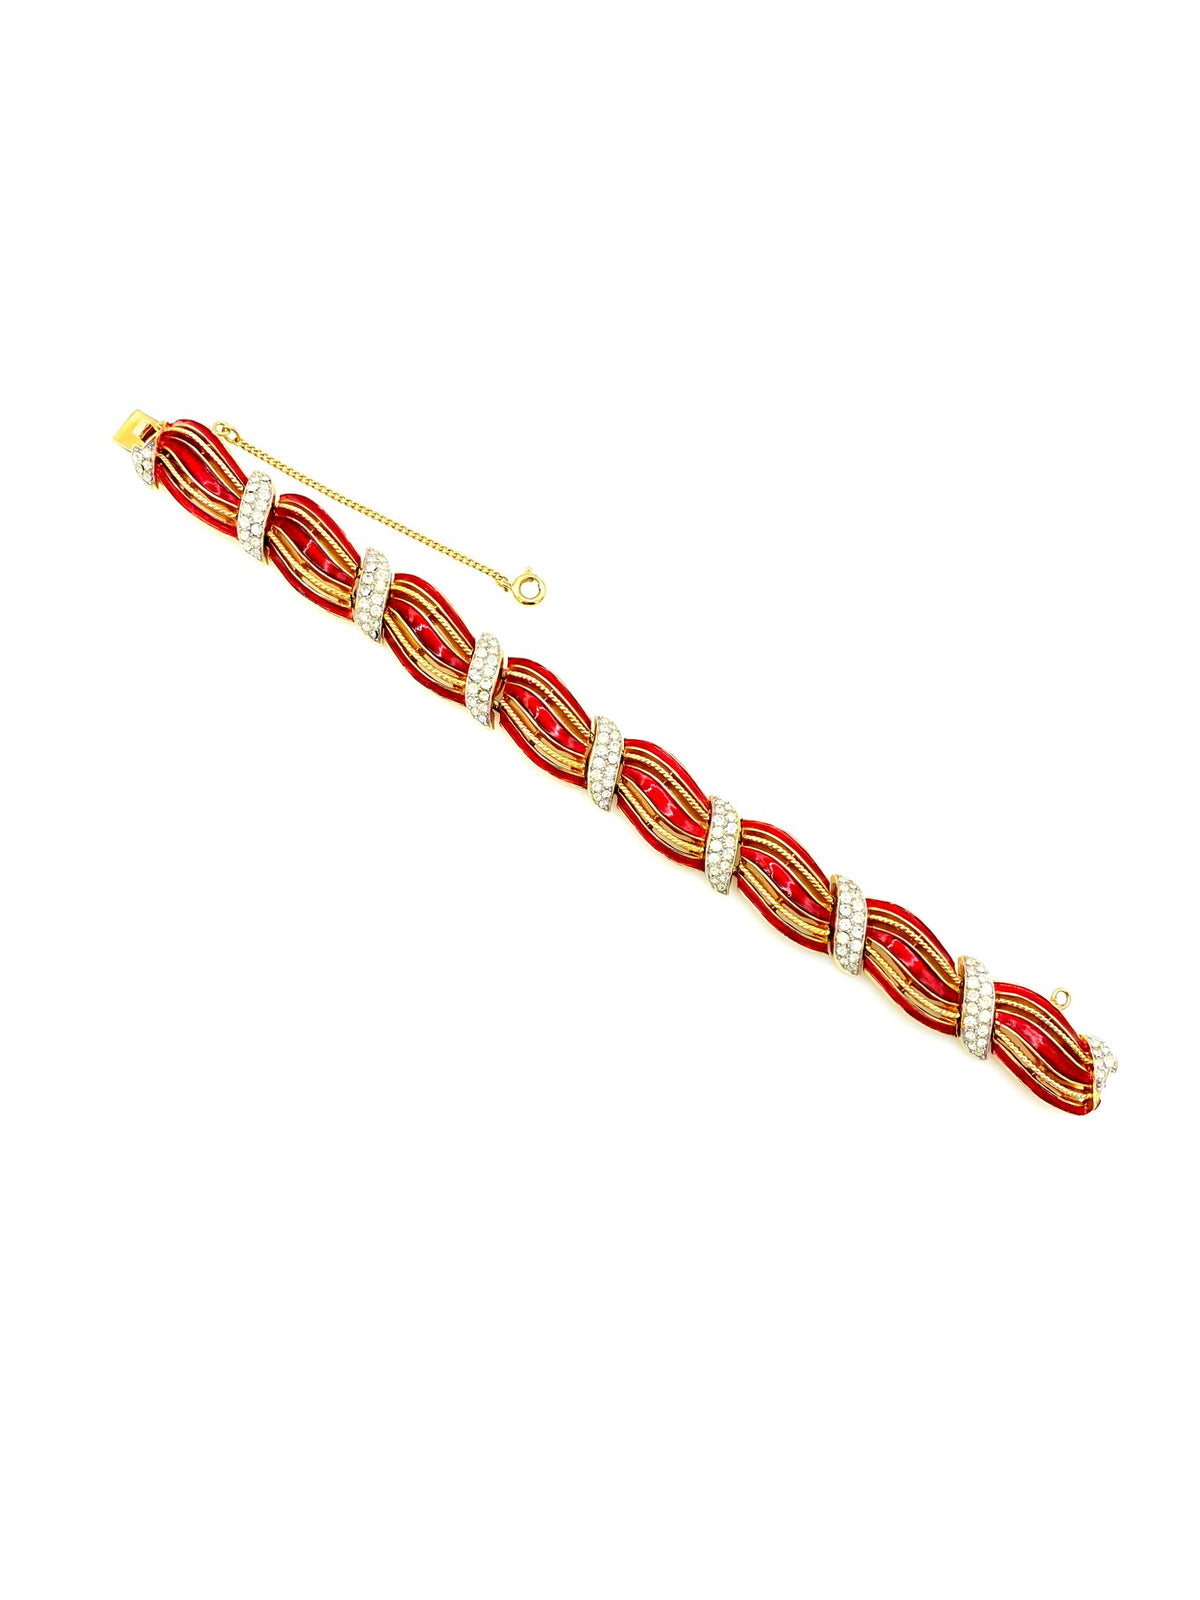 Gold Vintage Trifari Red Enamel Bow Rope Bracelet - 24 Wishes Vintage Jewelry